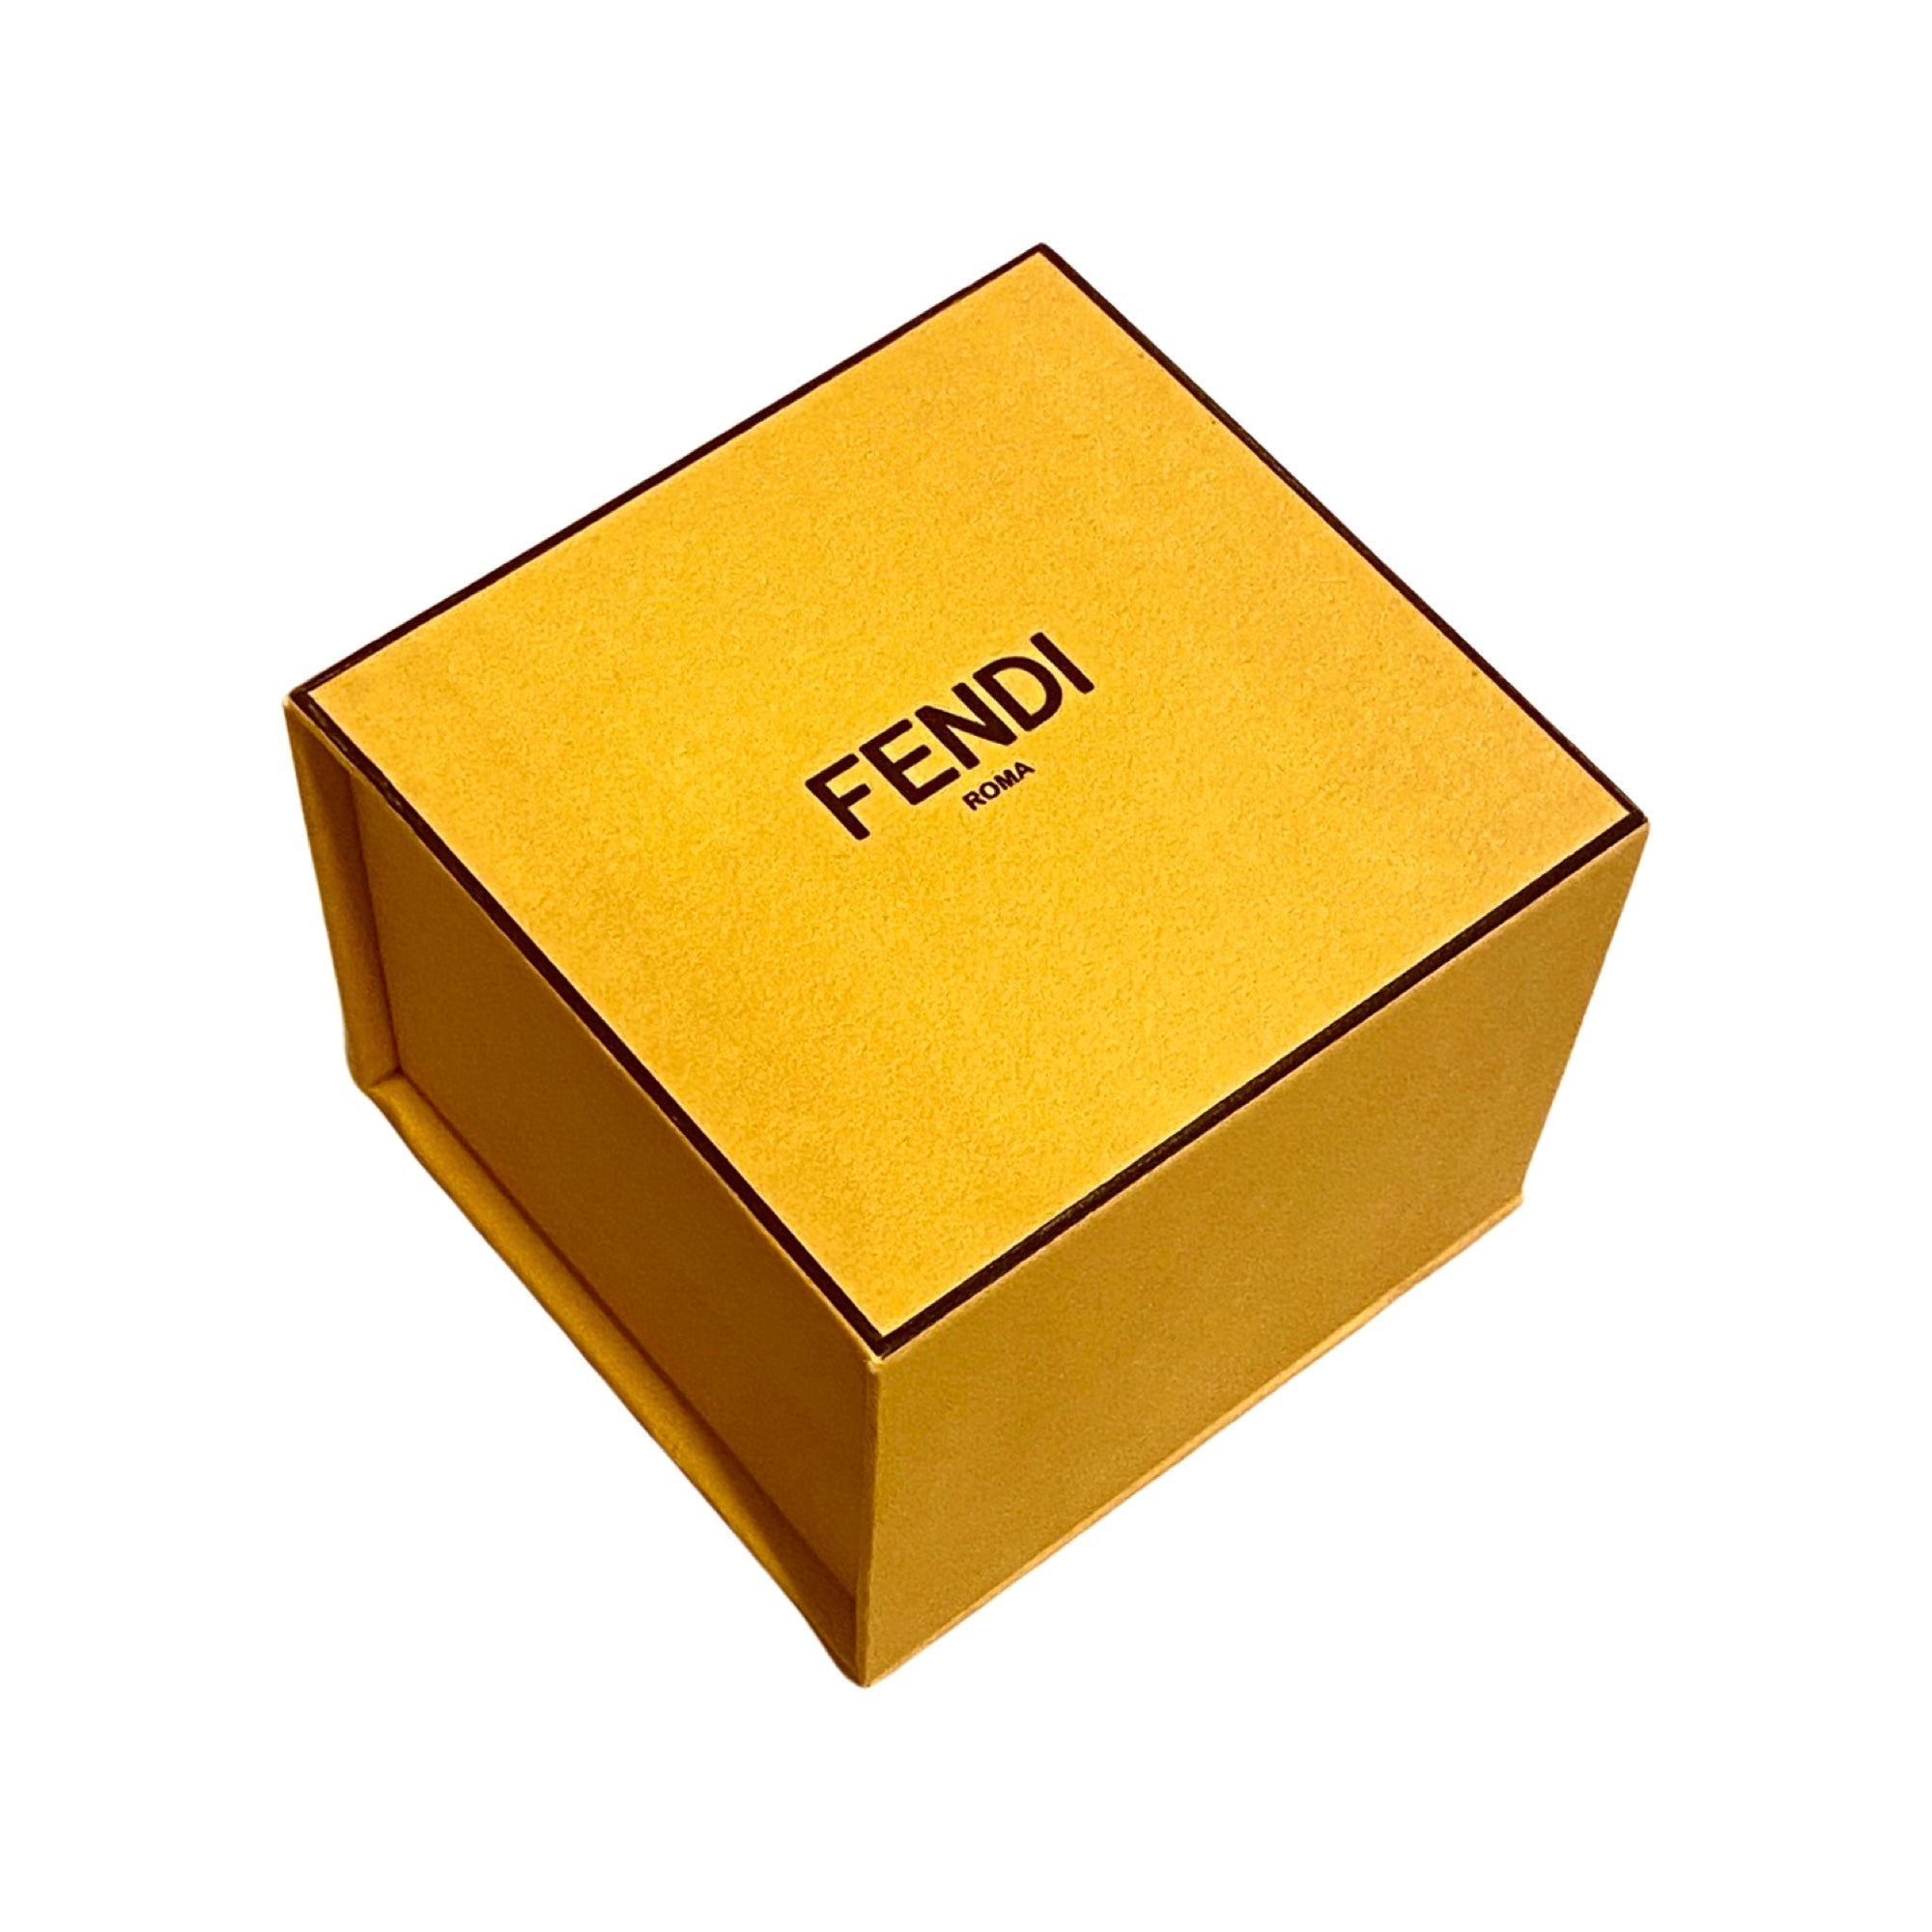 Fendi Master Key Light Rose Leather Gold Medium Bracelet